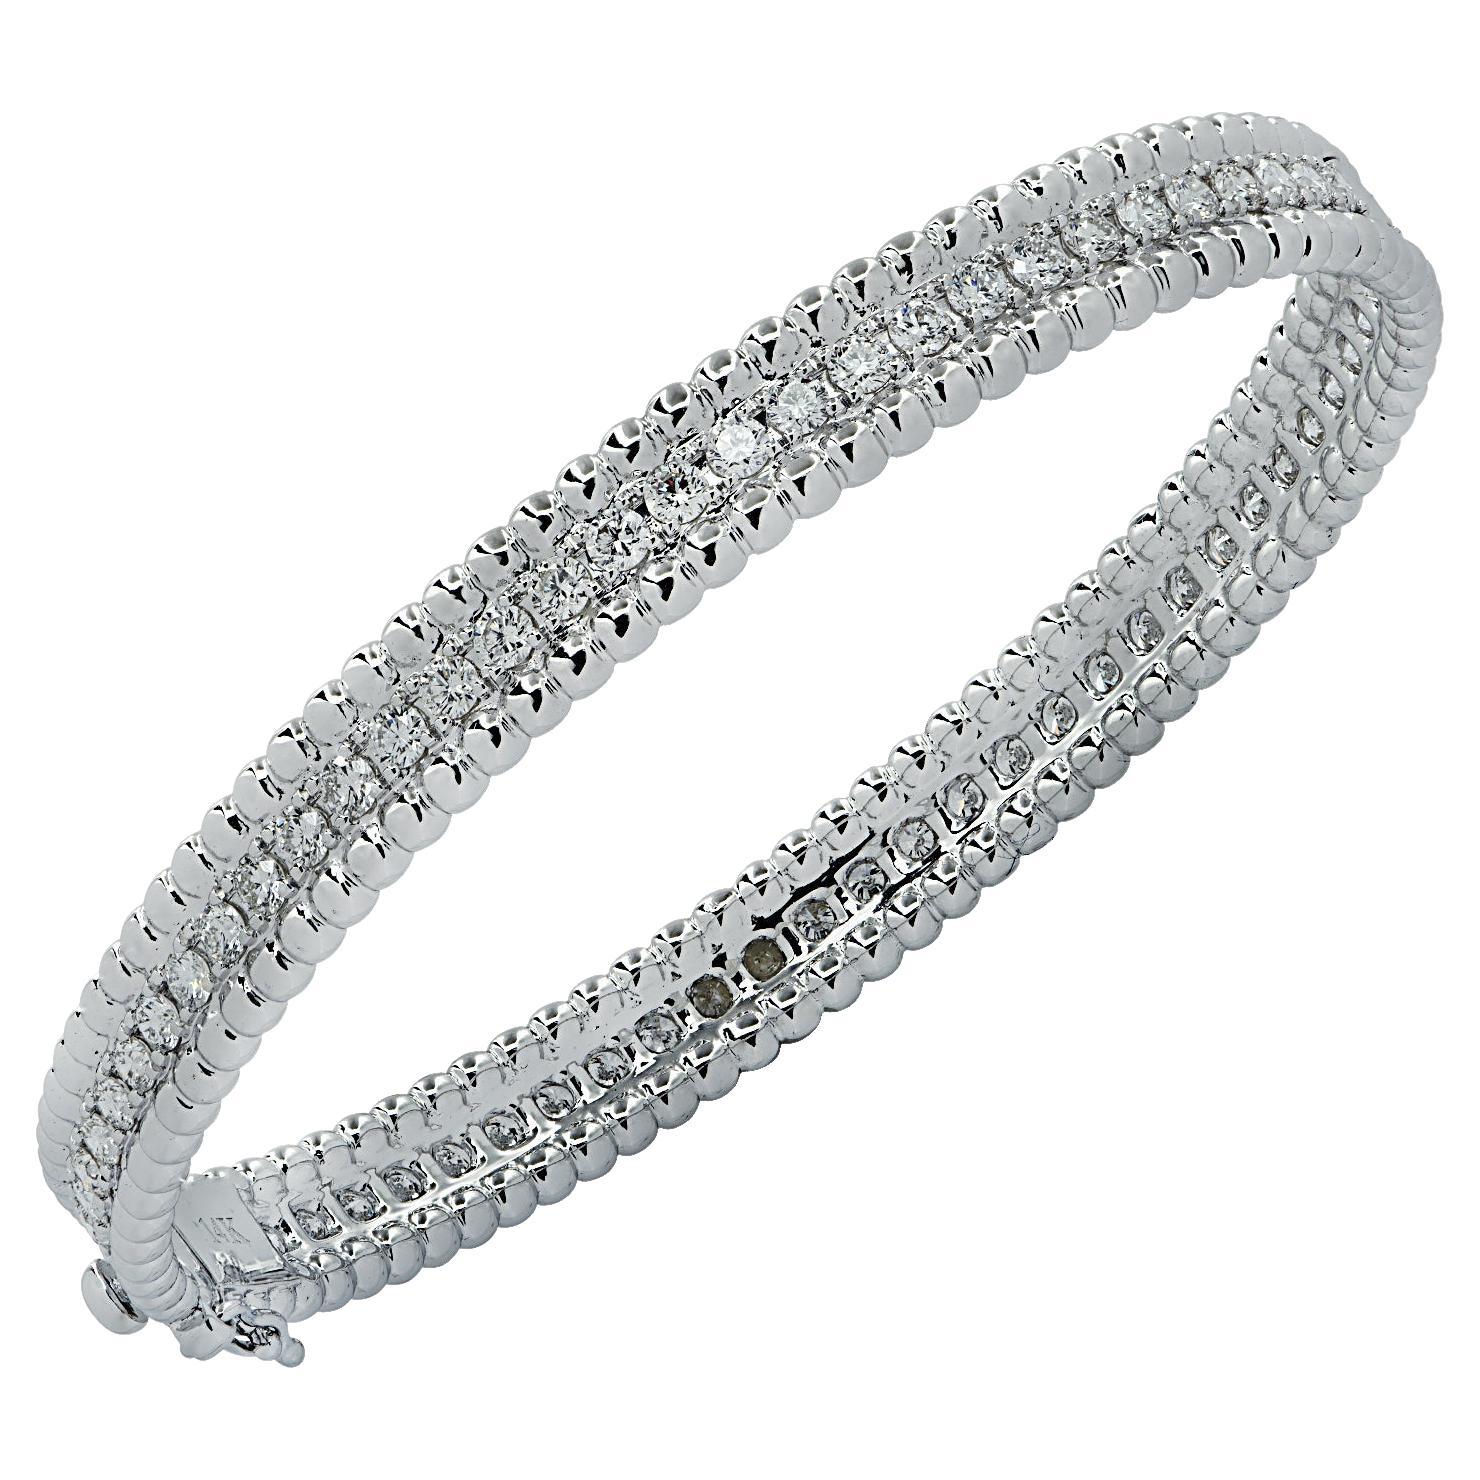 Vivid Diamonds 2.77 Carat Diamond Bangle Bracelet